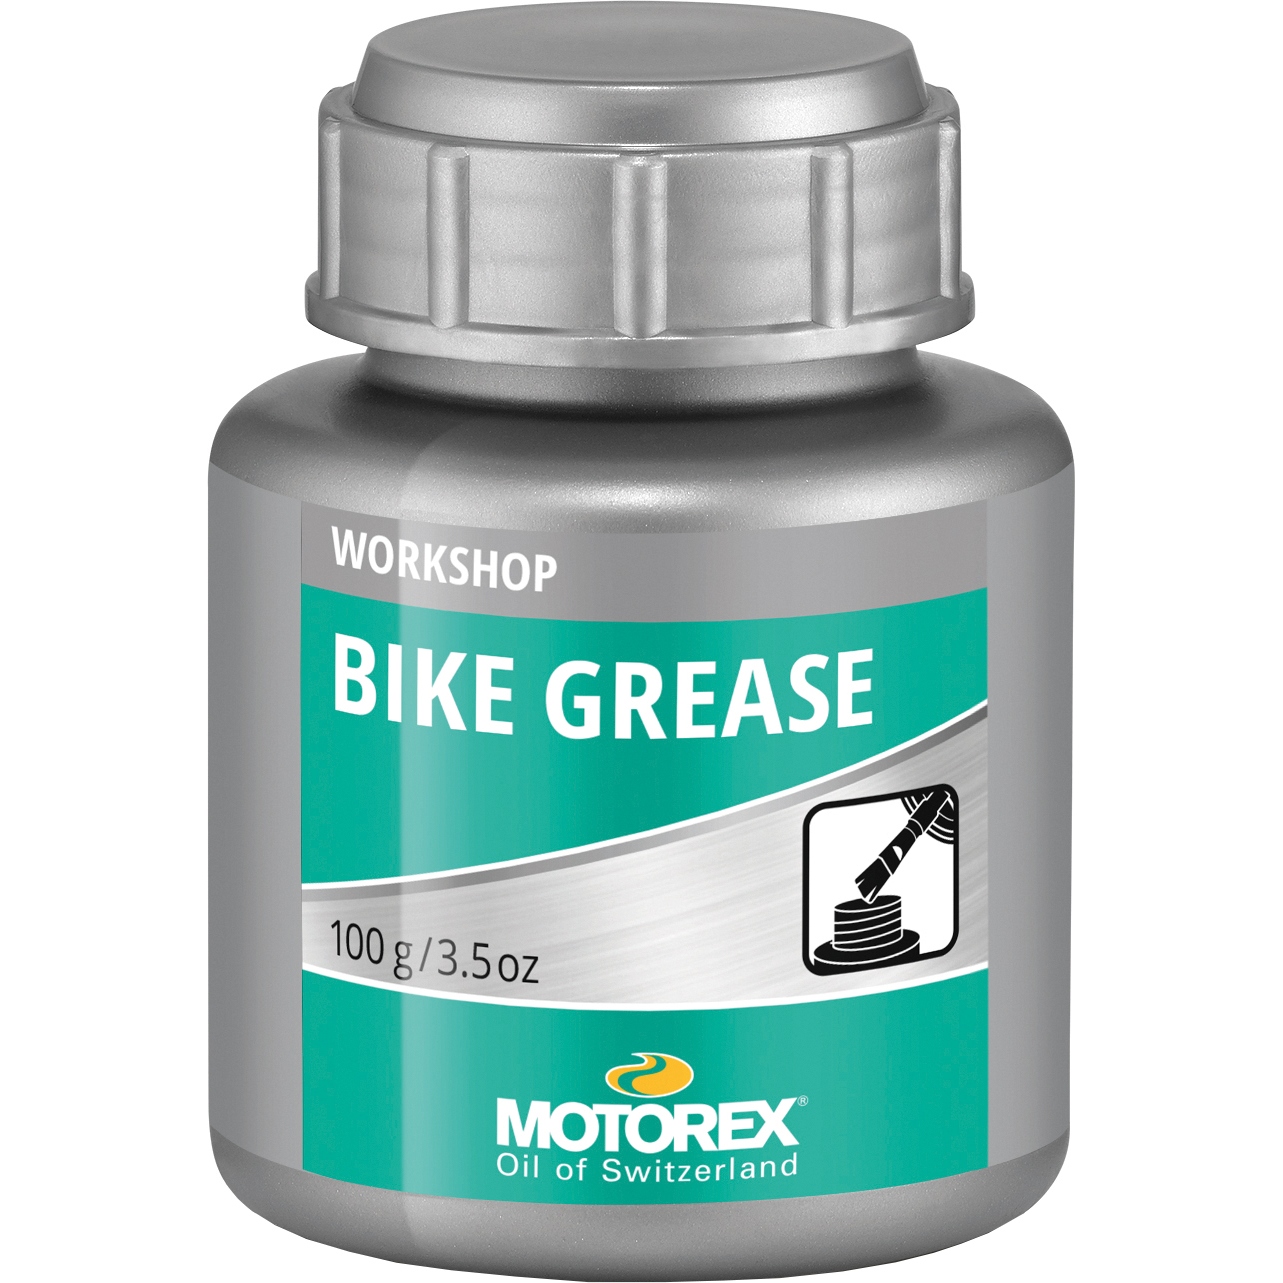 Productfoto van Motorex Bike Grease - 100g Can